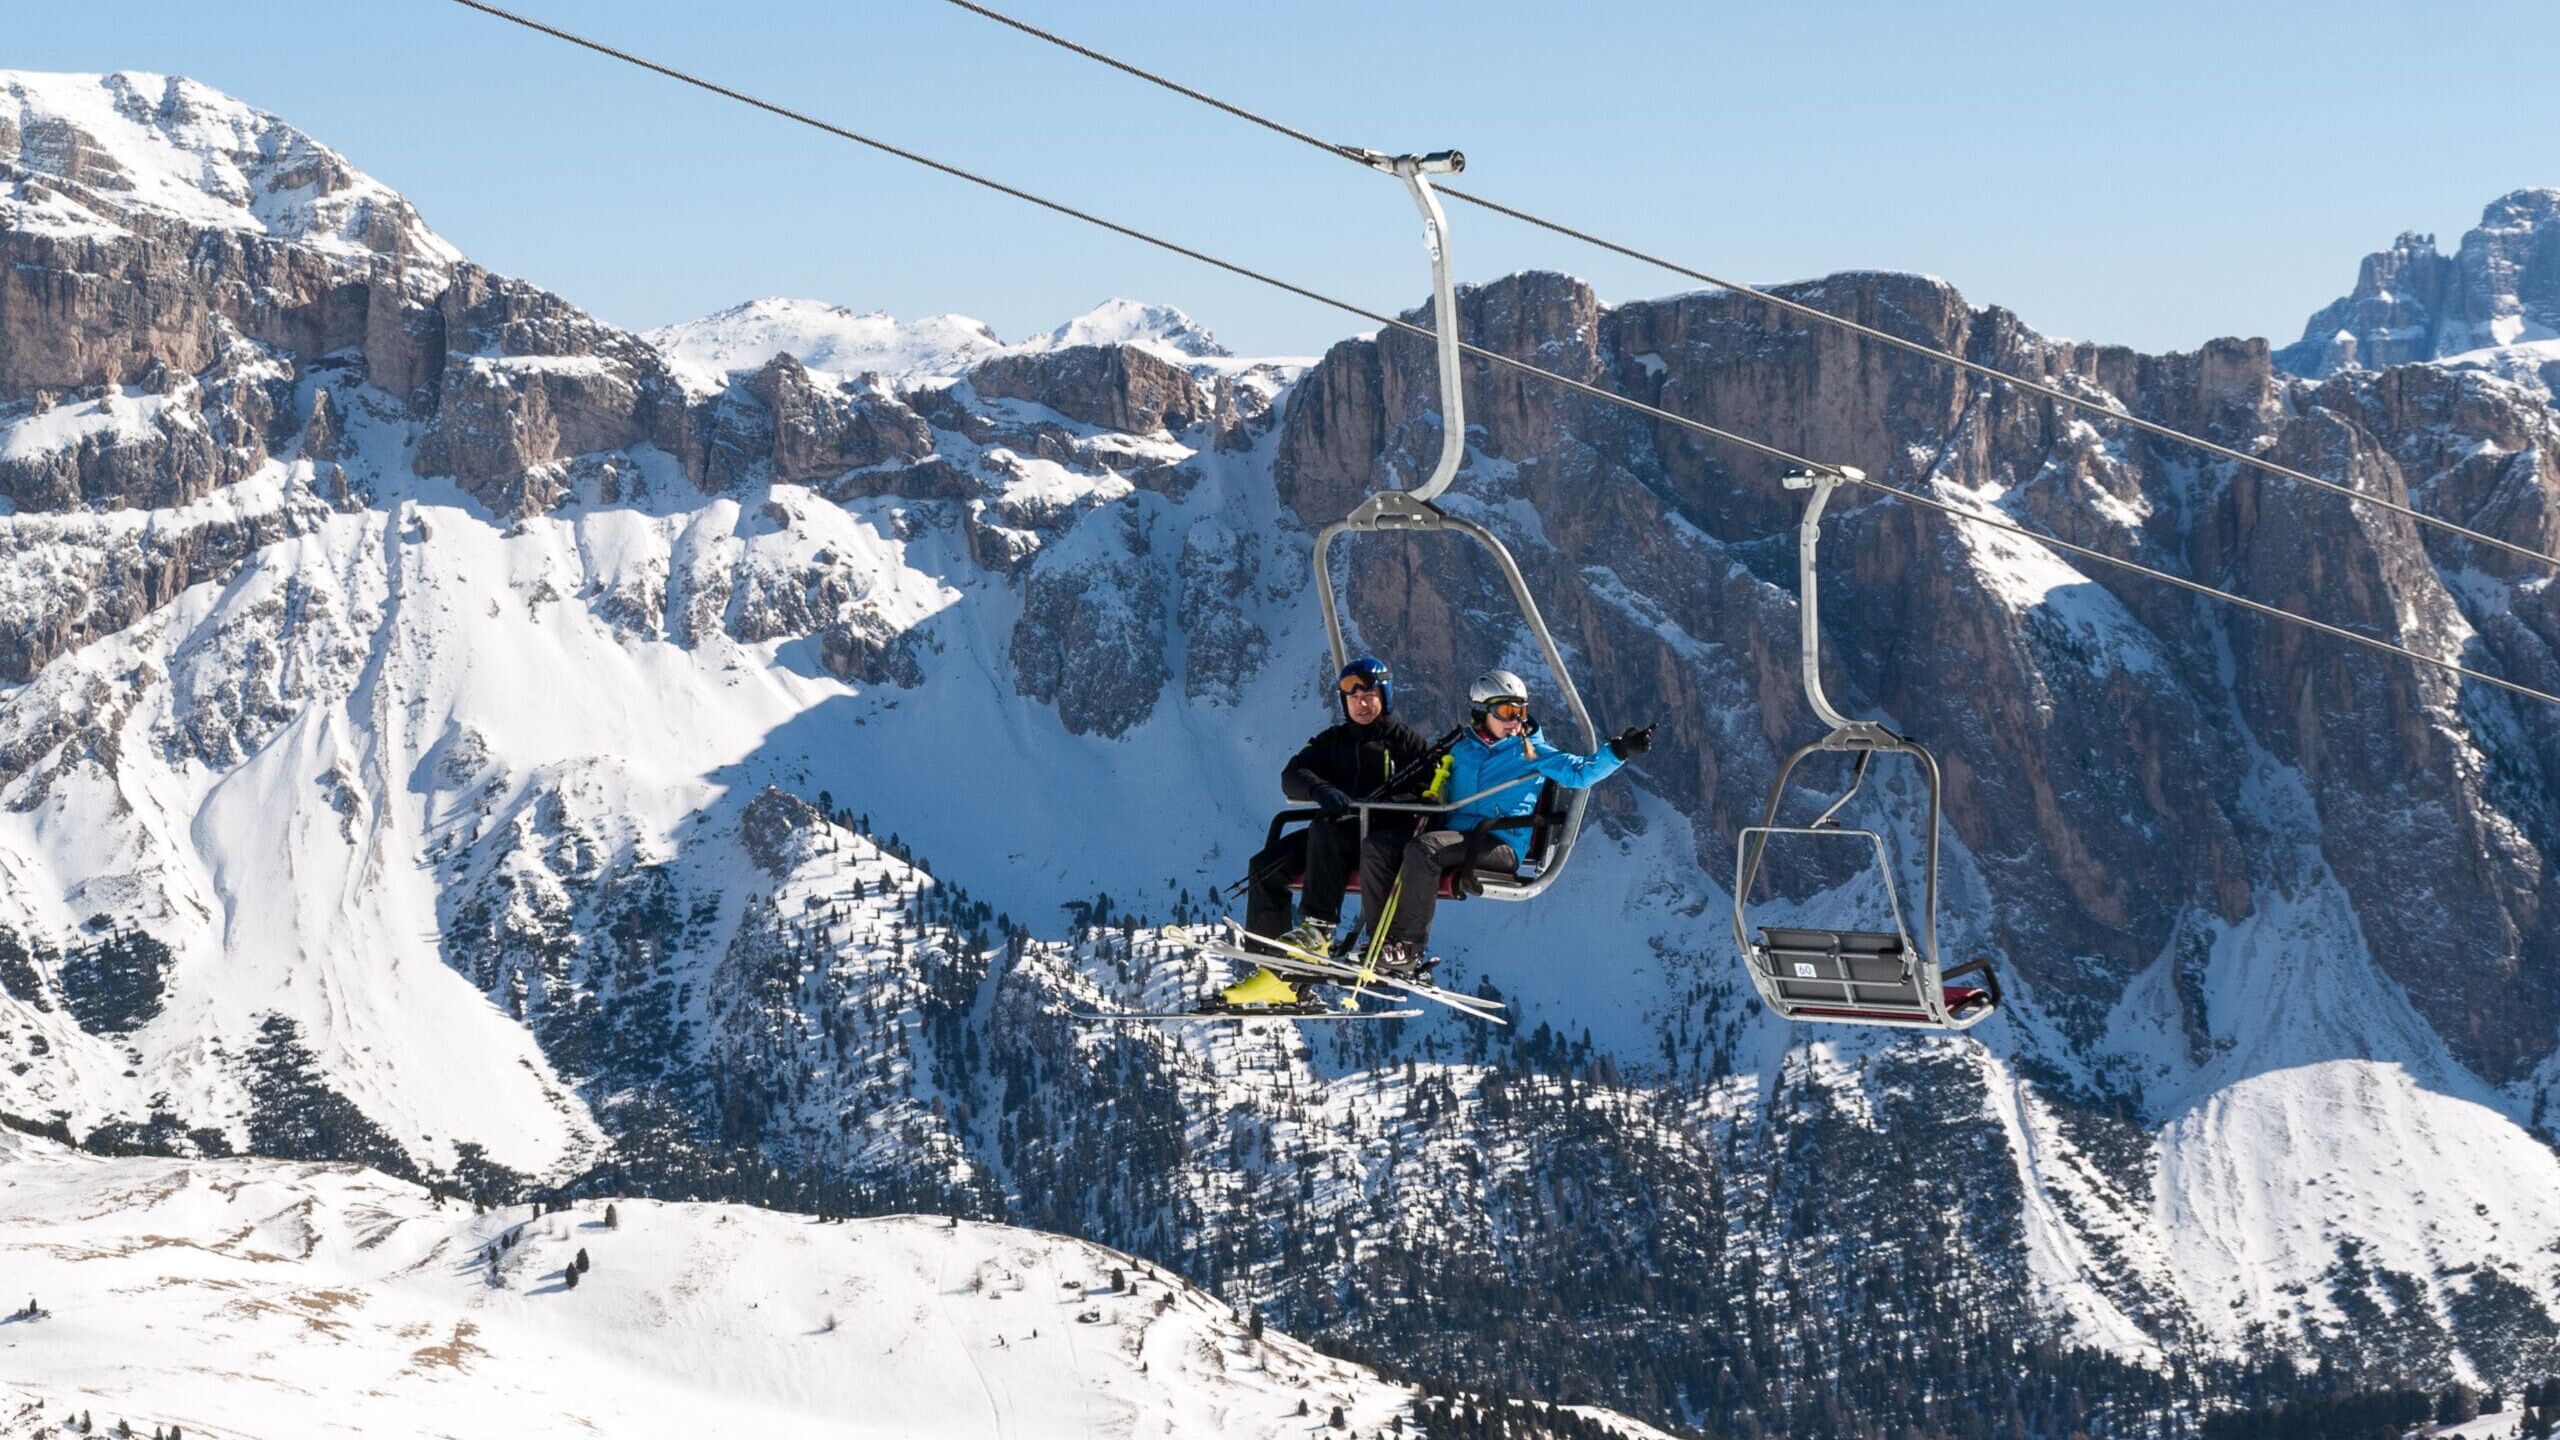 Ski lift on the Sellaronda, Dolomiti Superski